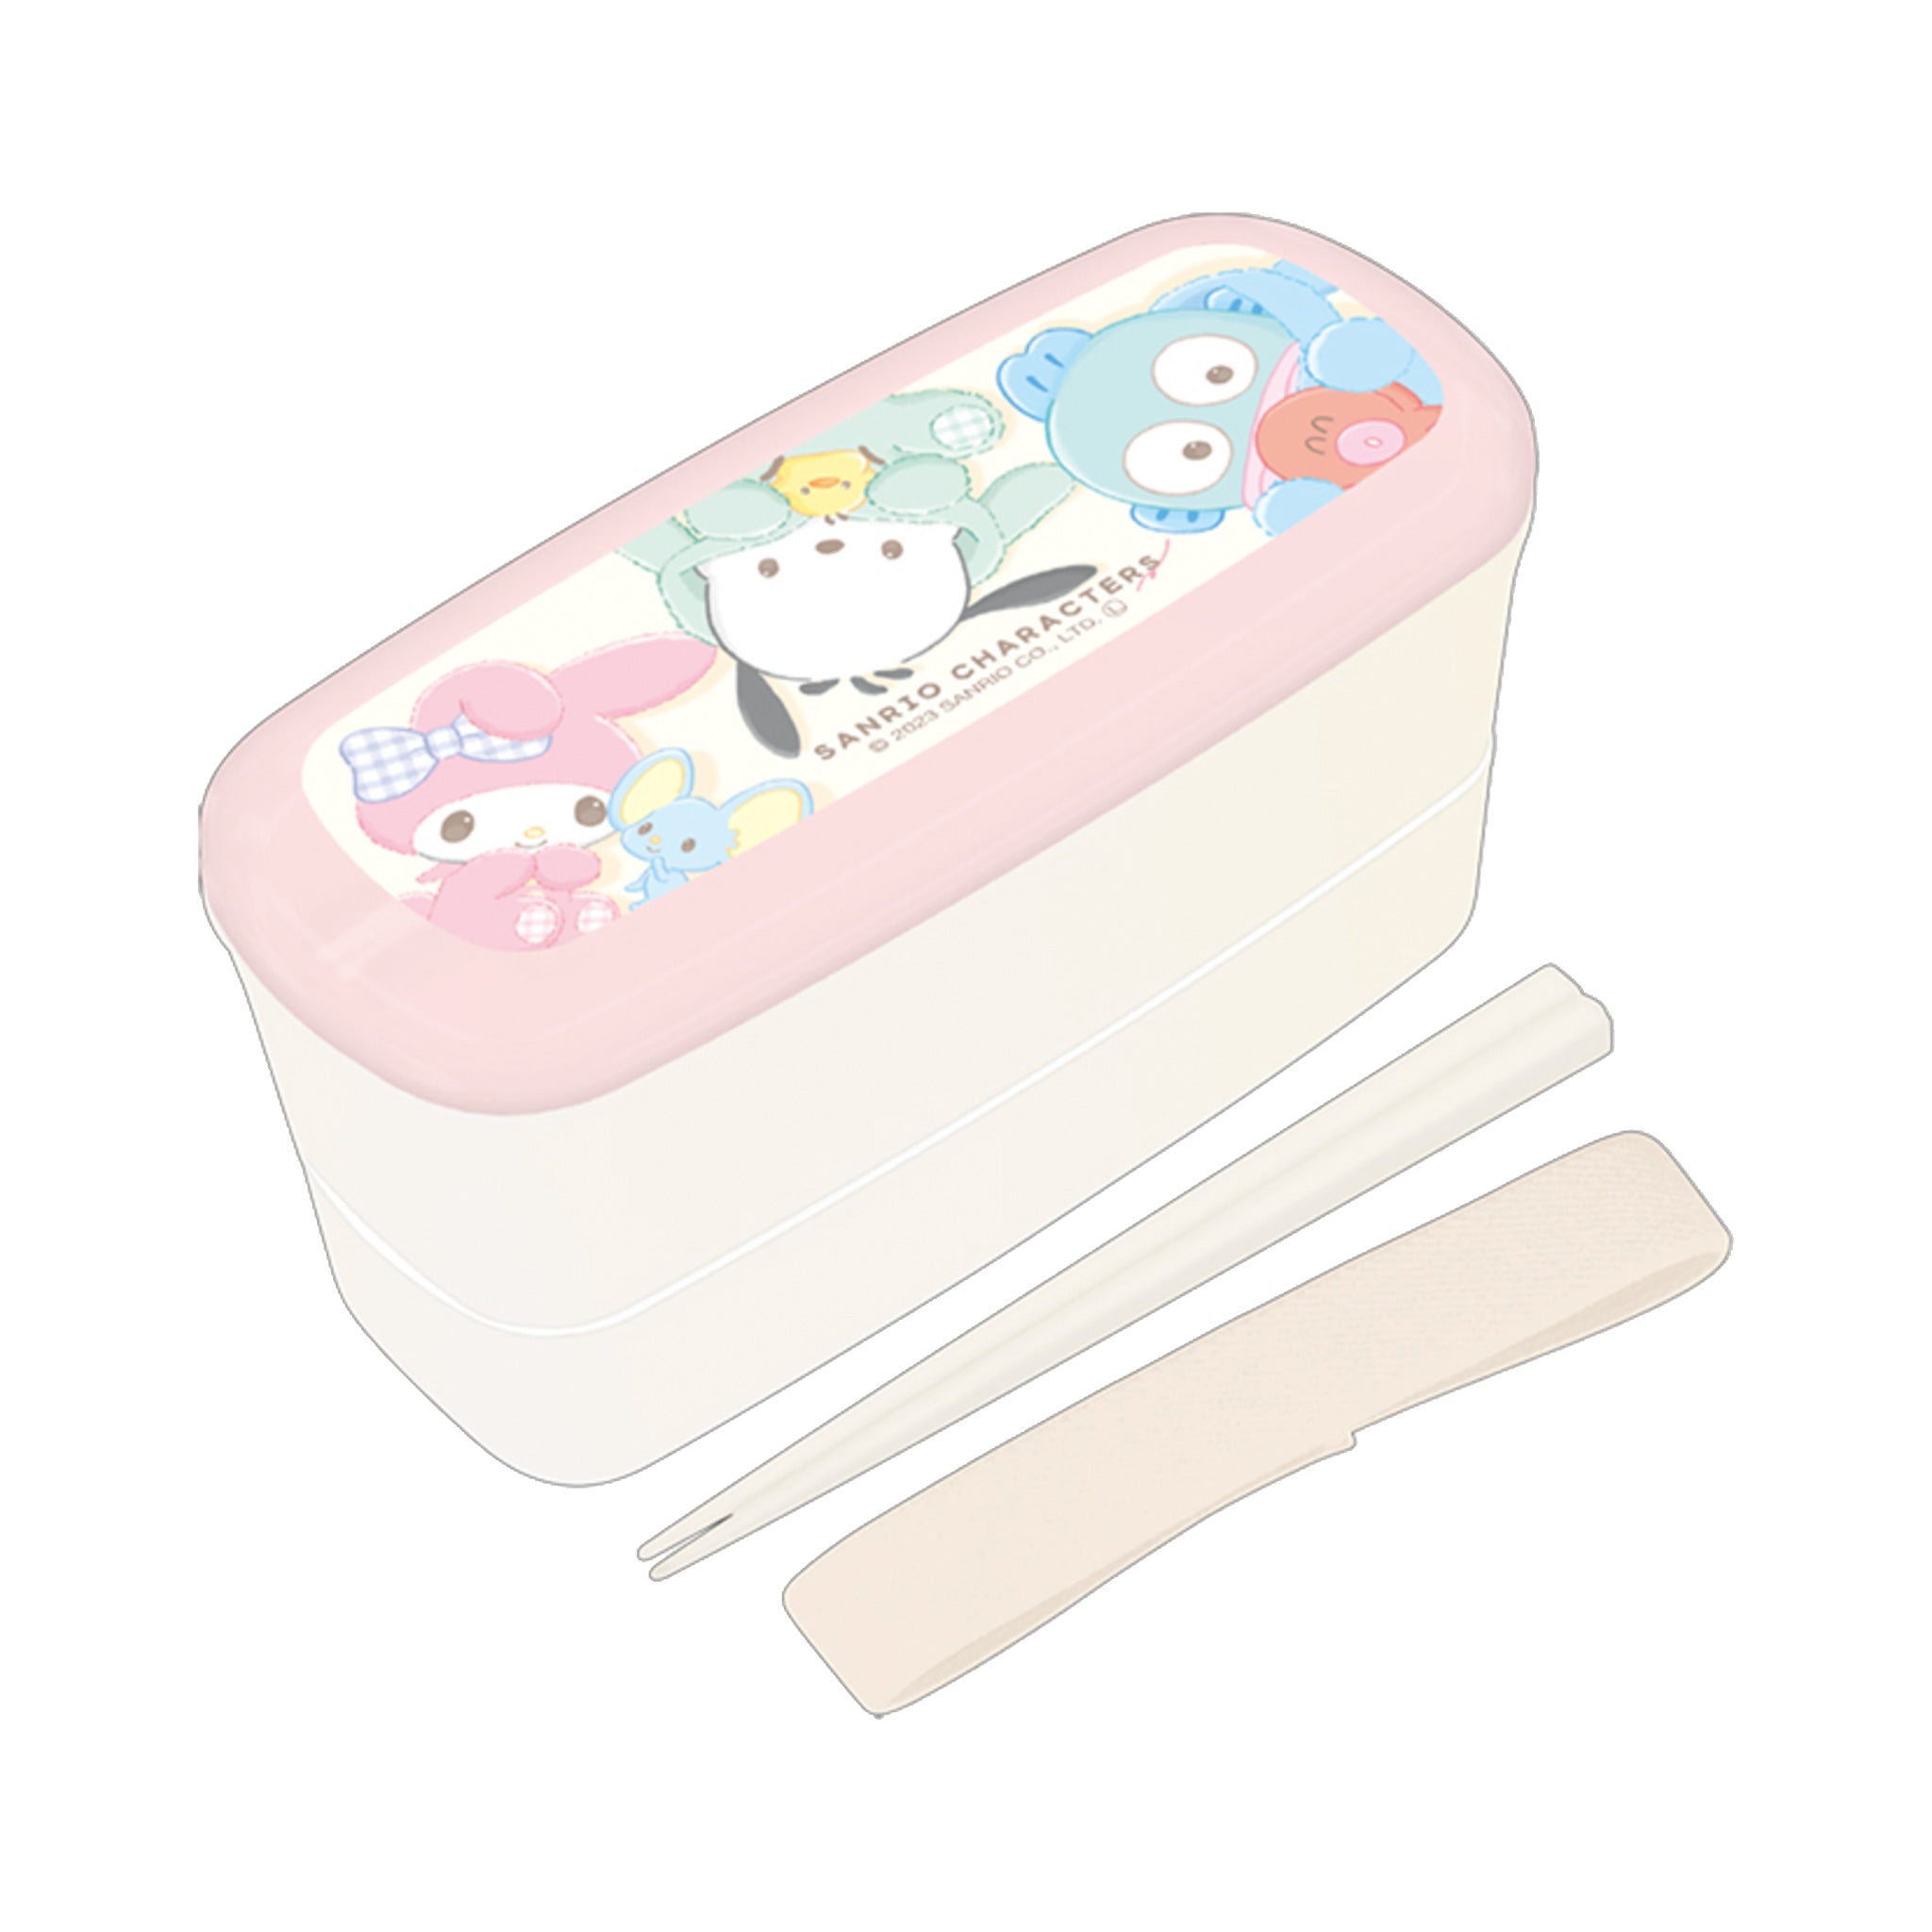 Sanrio Characters Antibacterial 2-tier lunch box